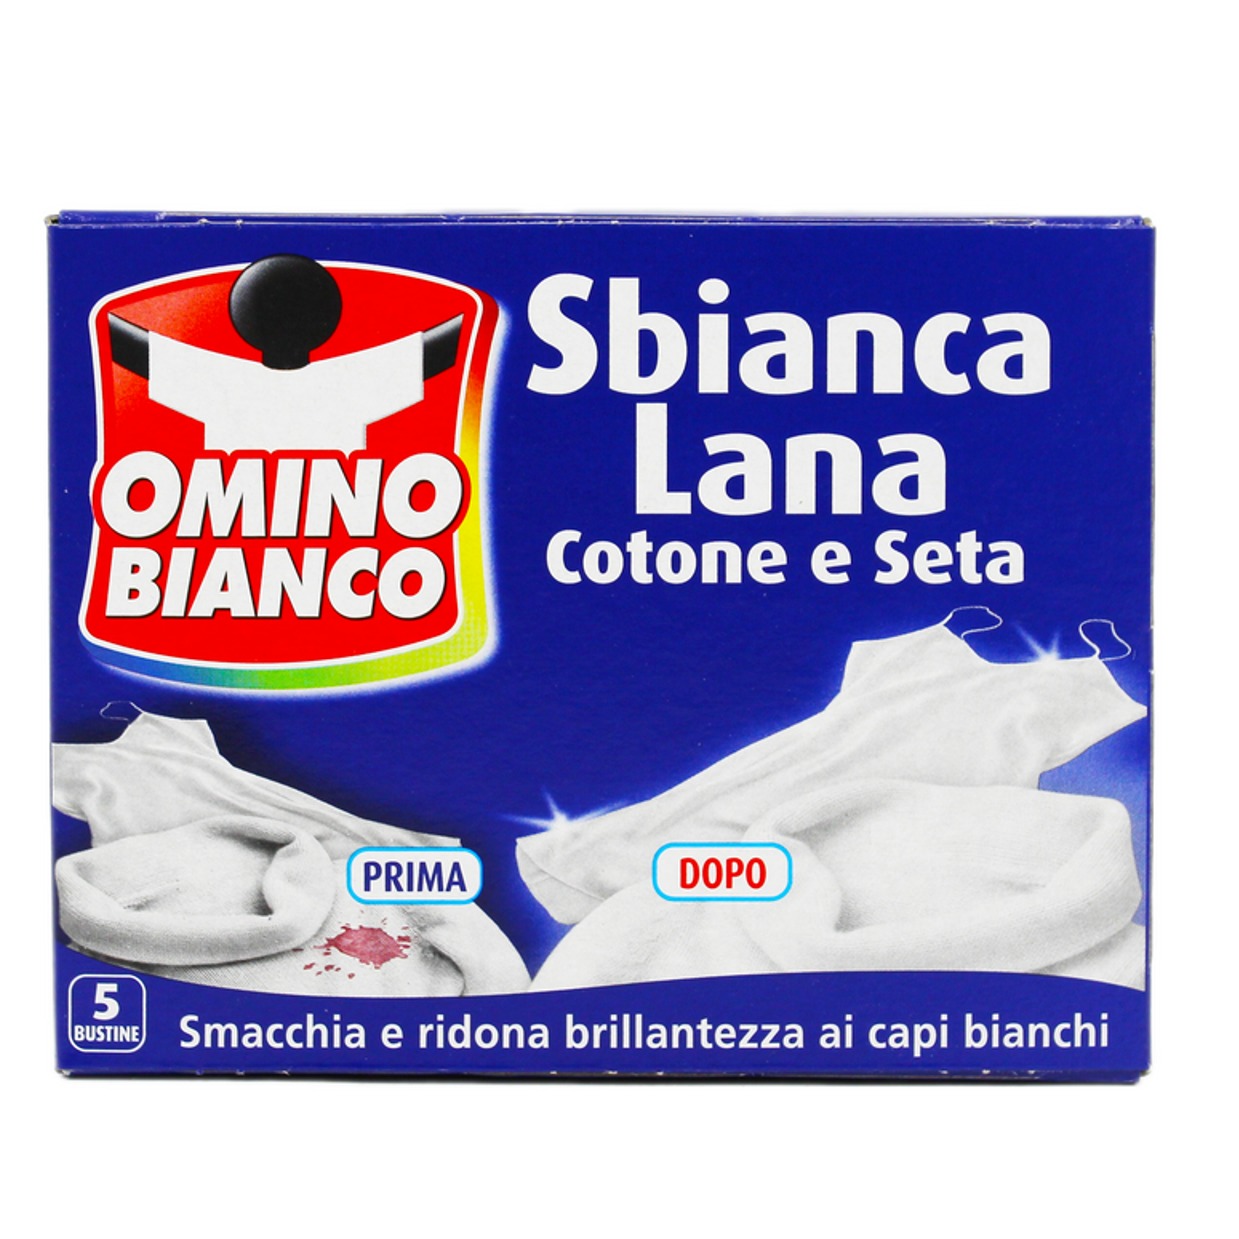 OMINO BIANCO SBIANCALANA 100GR.